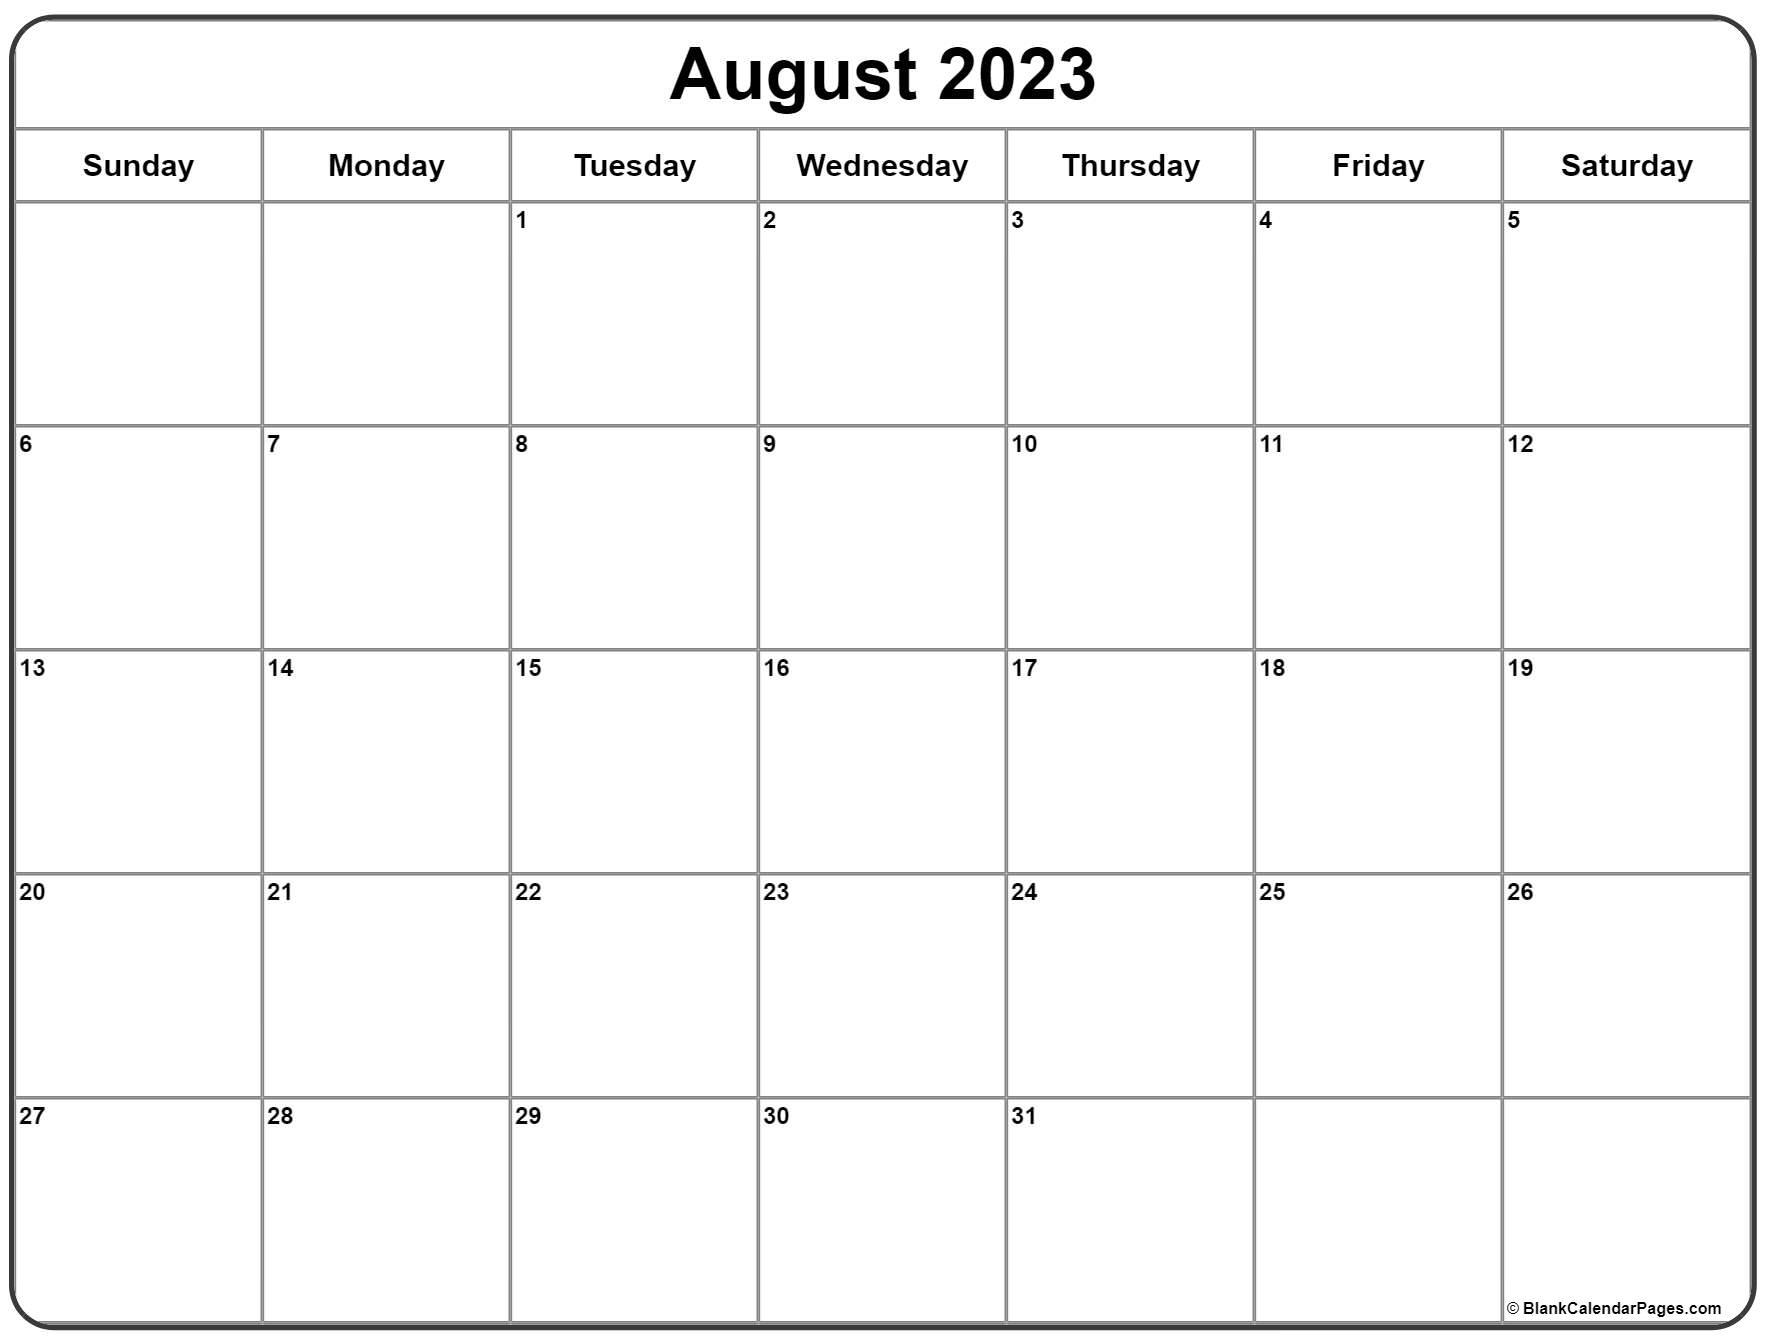 August 2023 calendar free printable calendar